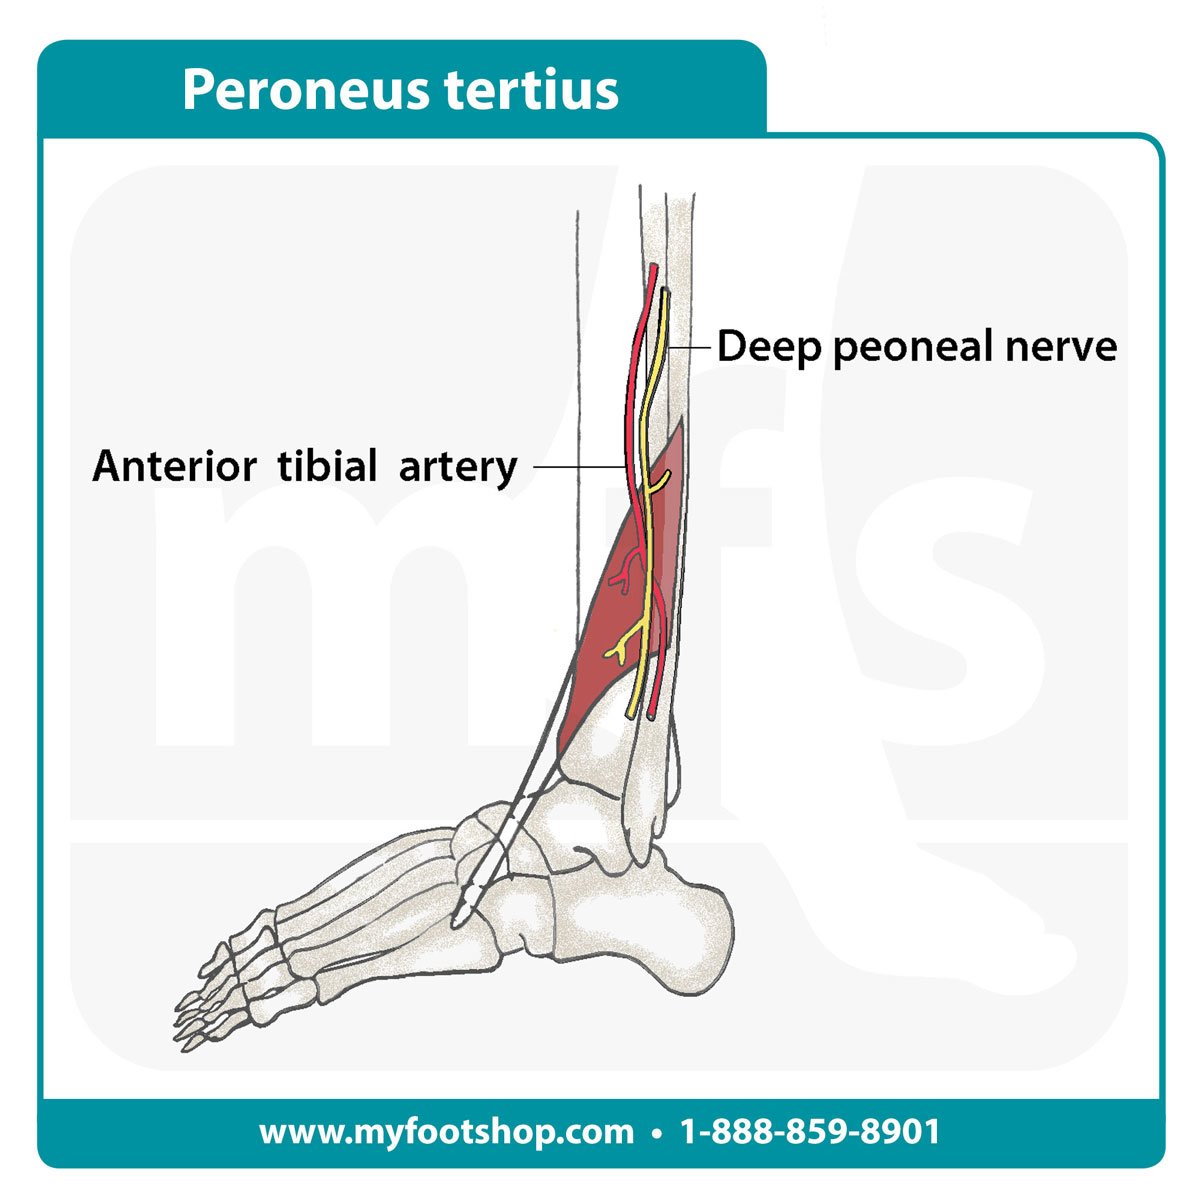 Peroneus tertius muscle